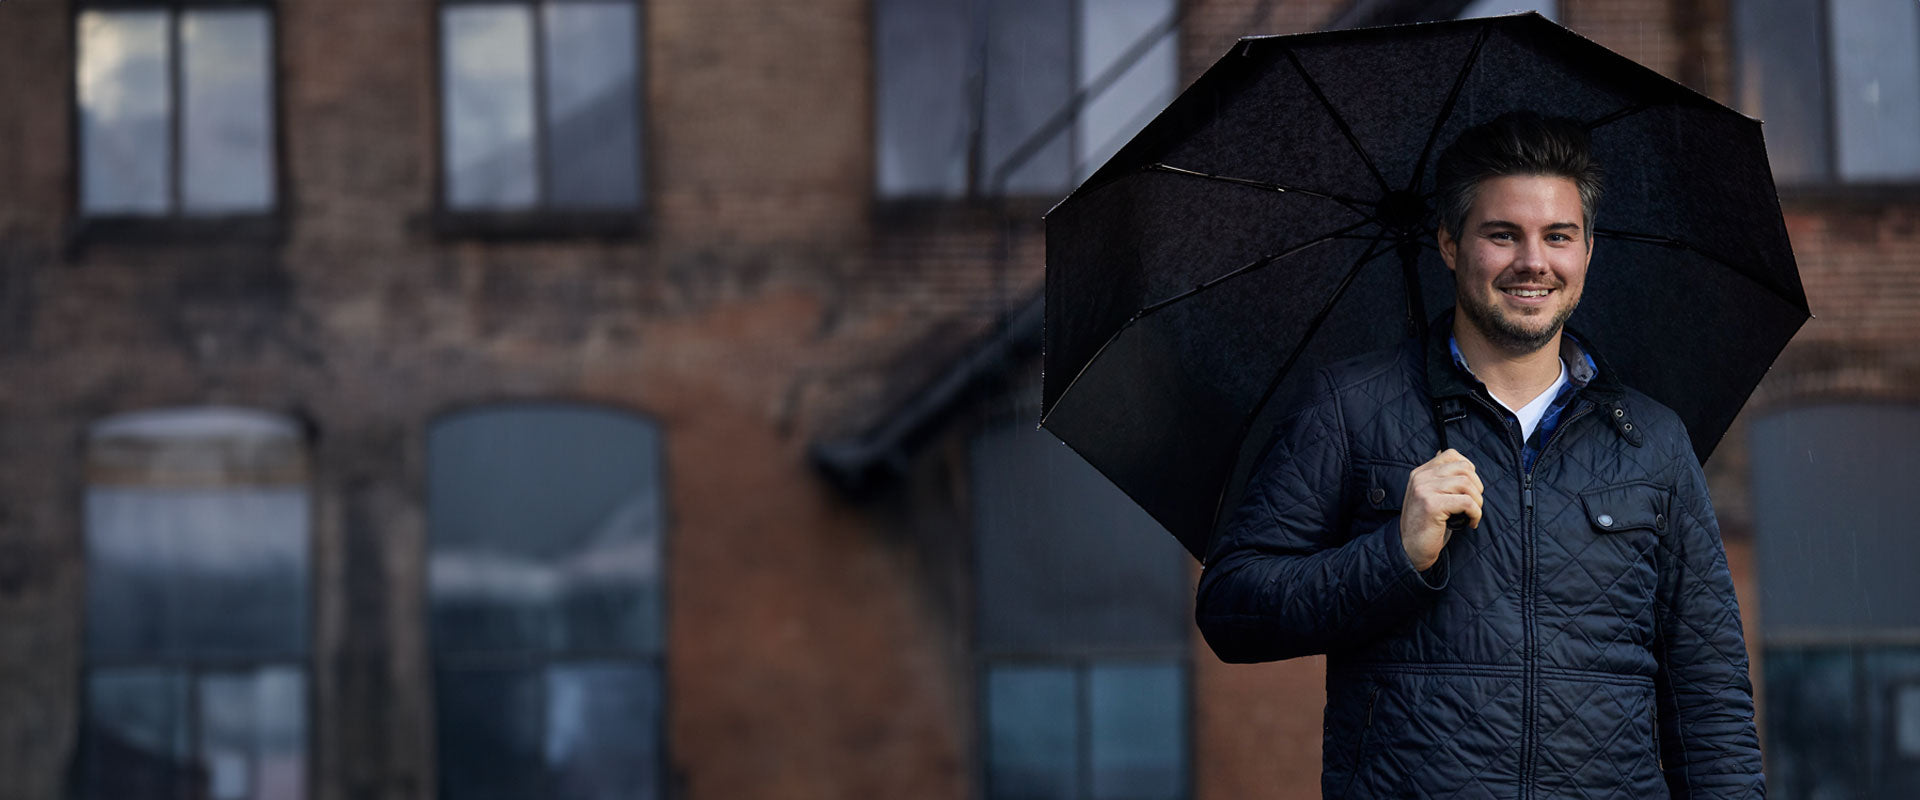 Man smiles holding a Gorilla Grip travel umbrella in a city setting